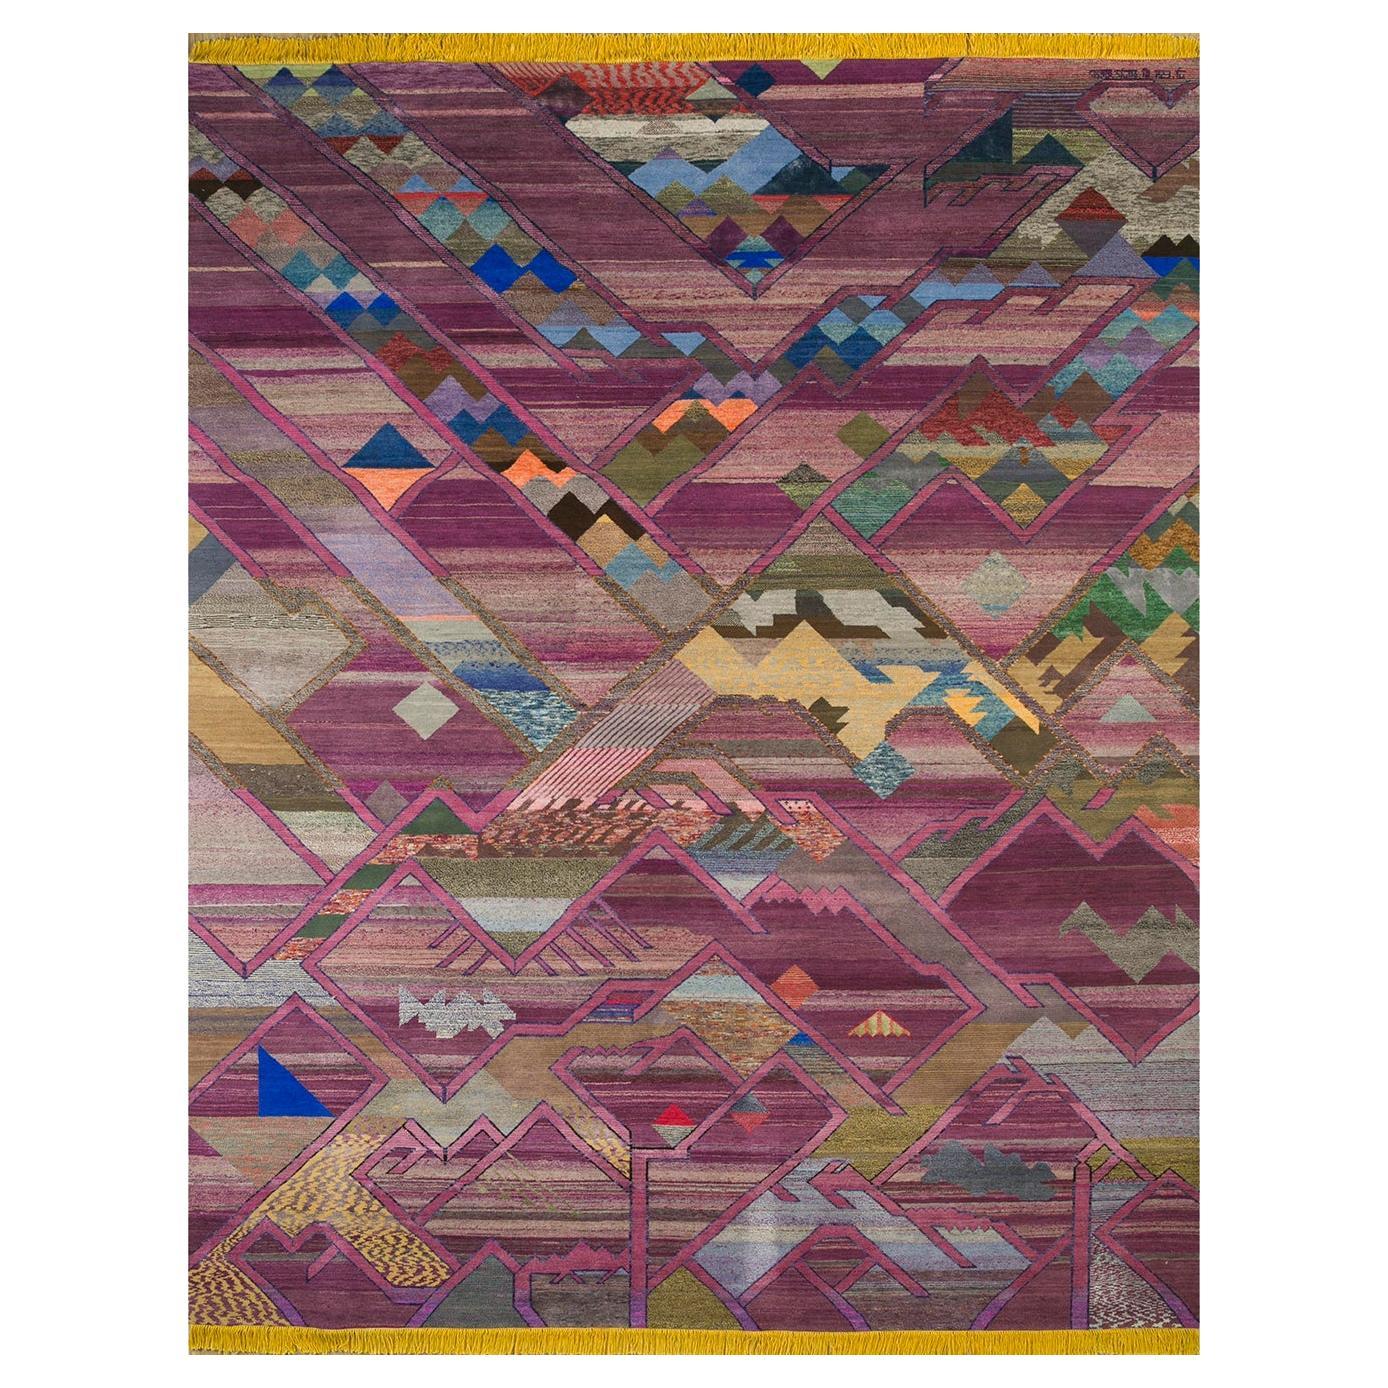 Raasta-Teppich, einzigartig, geknüpft, Wolle, Bambusseide, 270x360cm, Unikat